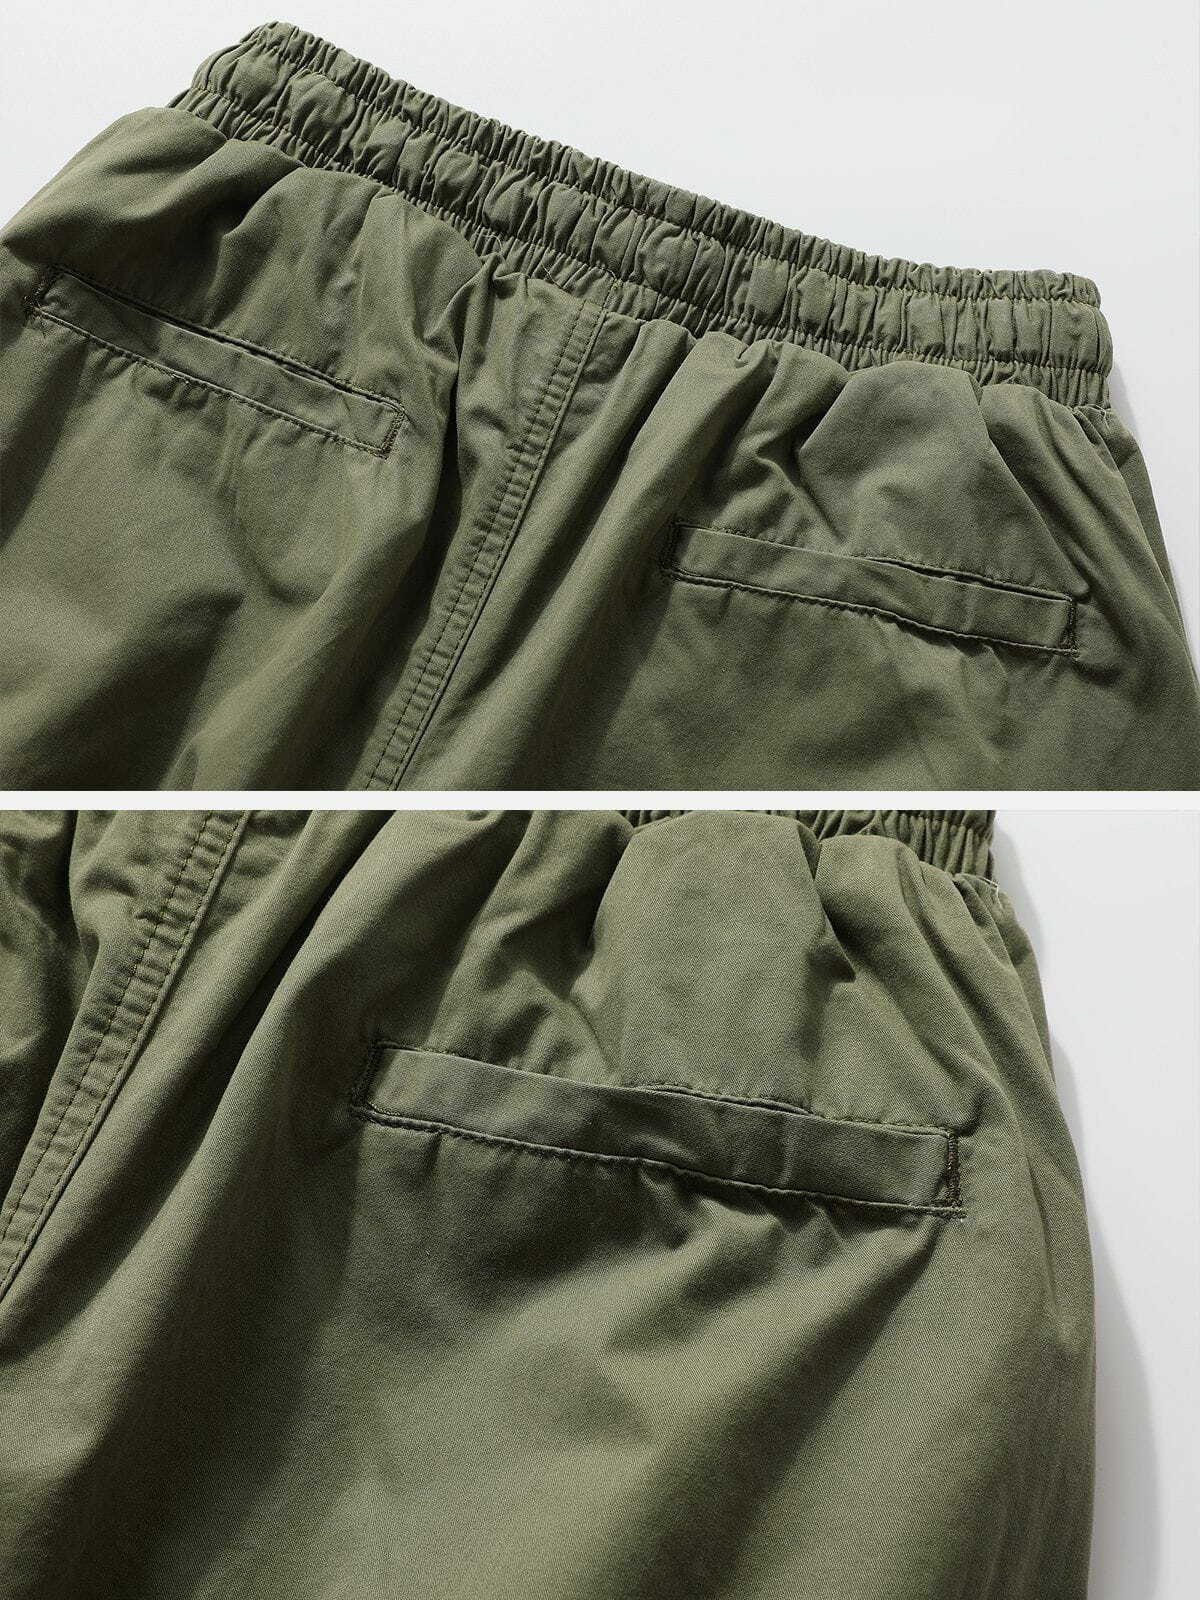 flap pocket pants functional & edgy streetwear 3121